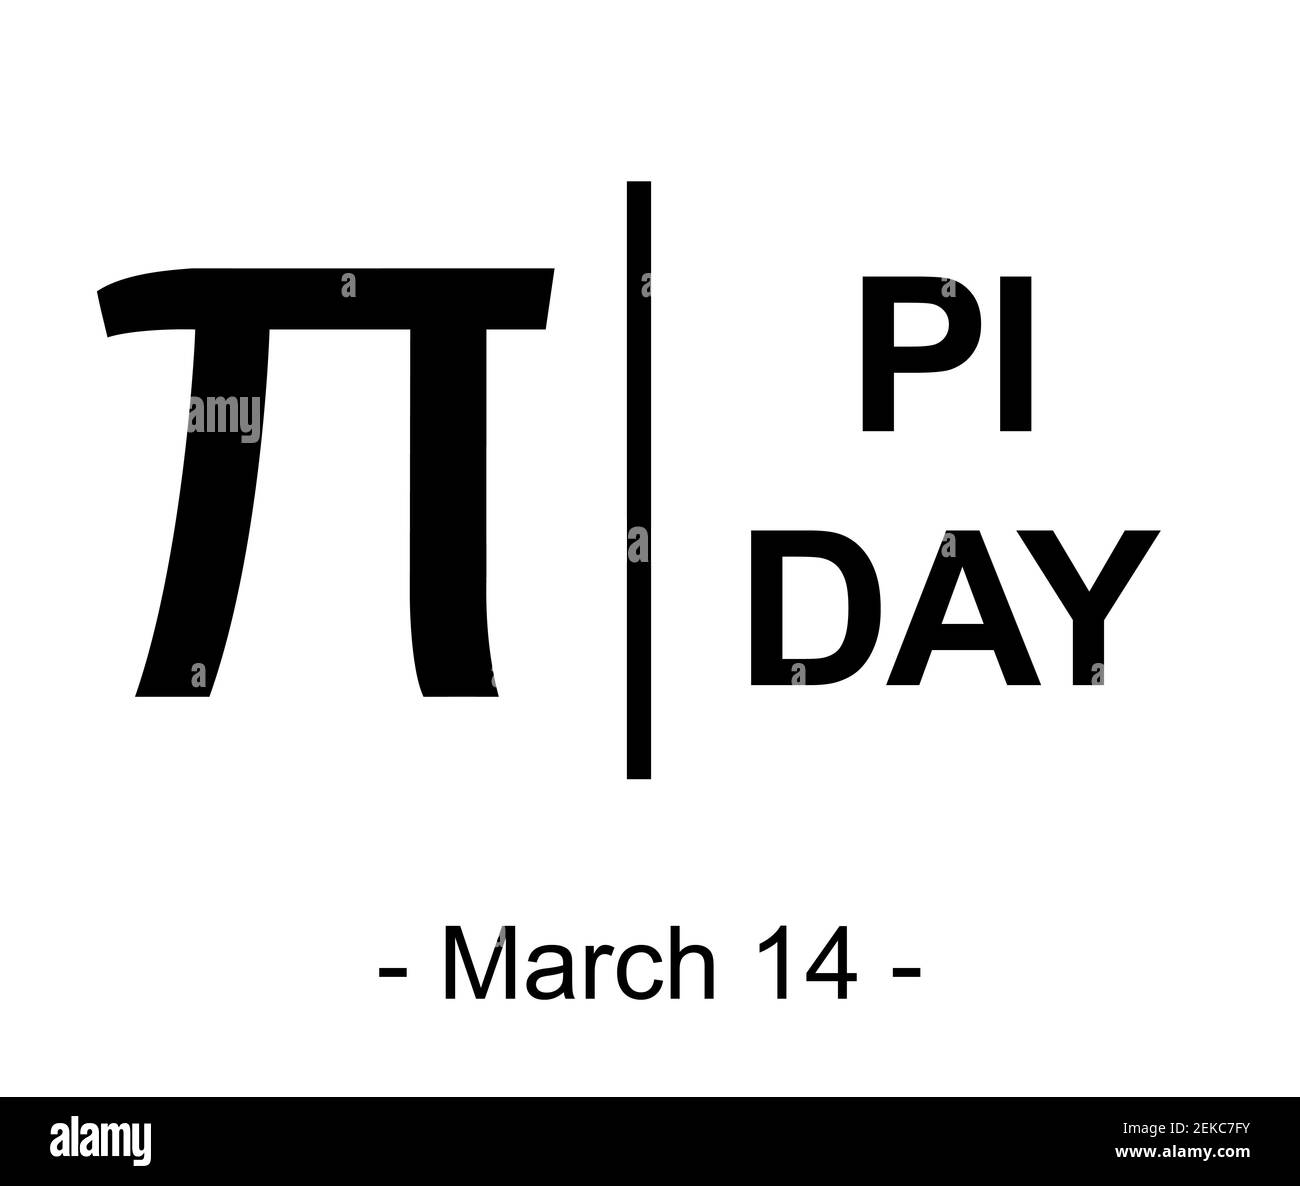 Pi Day symbol, sign, logo (3.14). Padlock design. White background. Vector illustration. March 14. Stock Photo